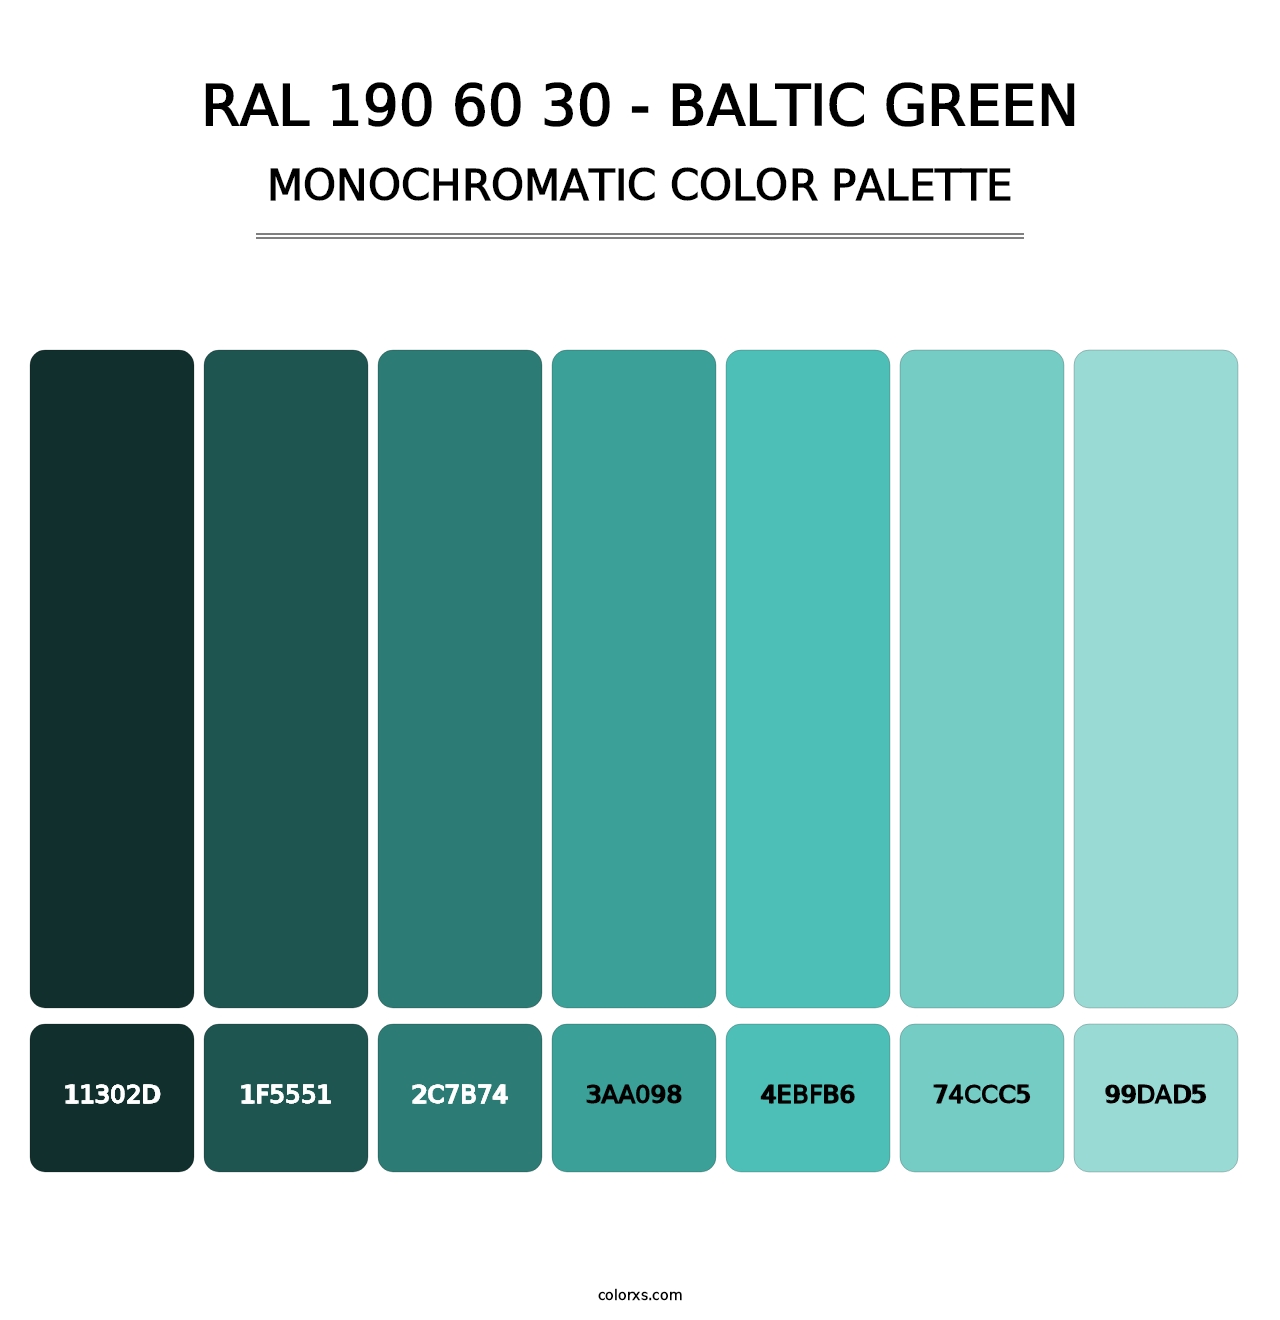 RAL 190 60 30 - Baltic Green - Monochromatic Color Palette